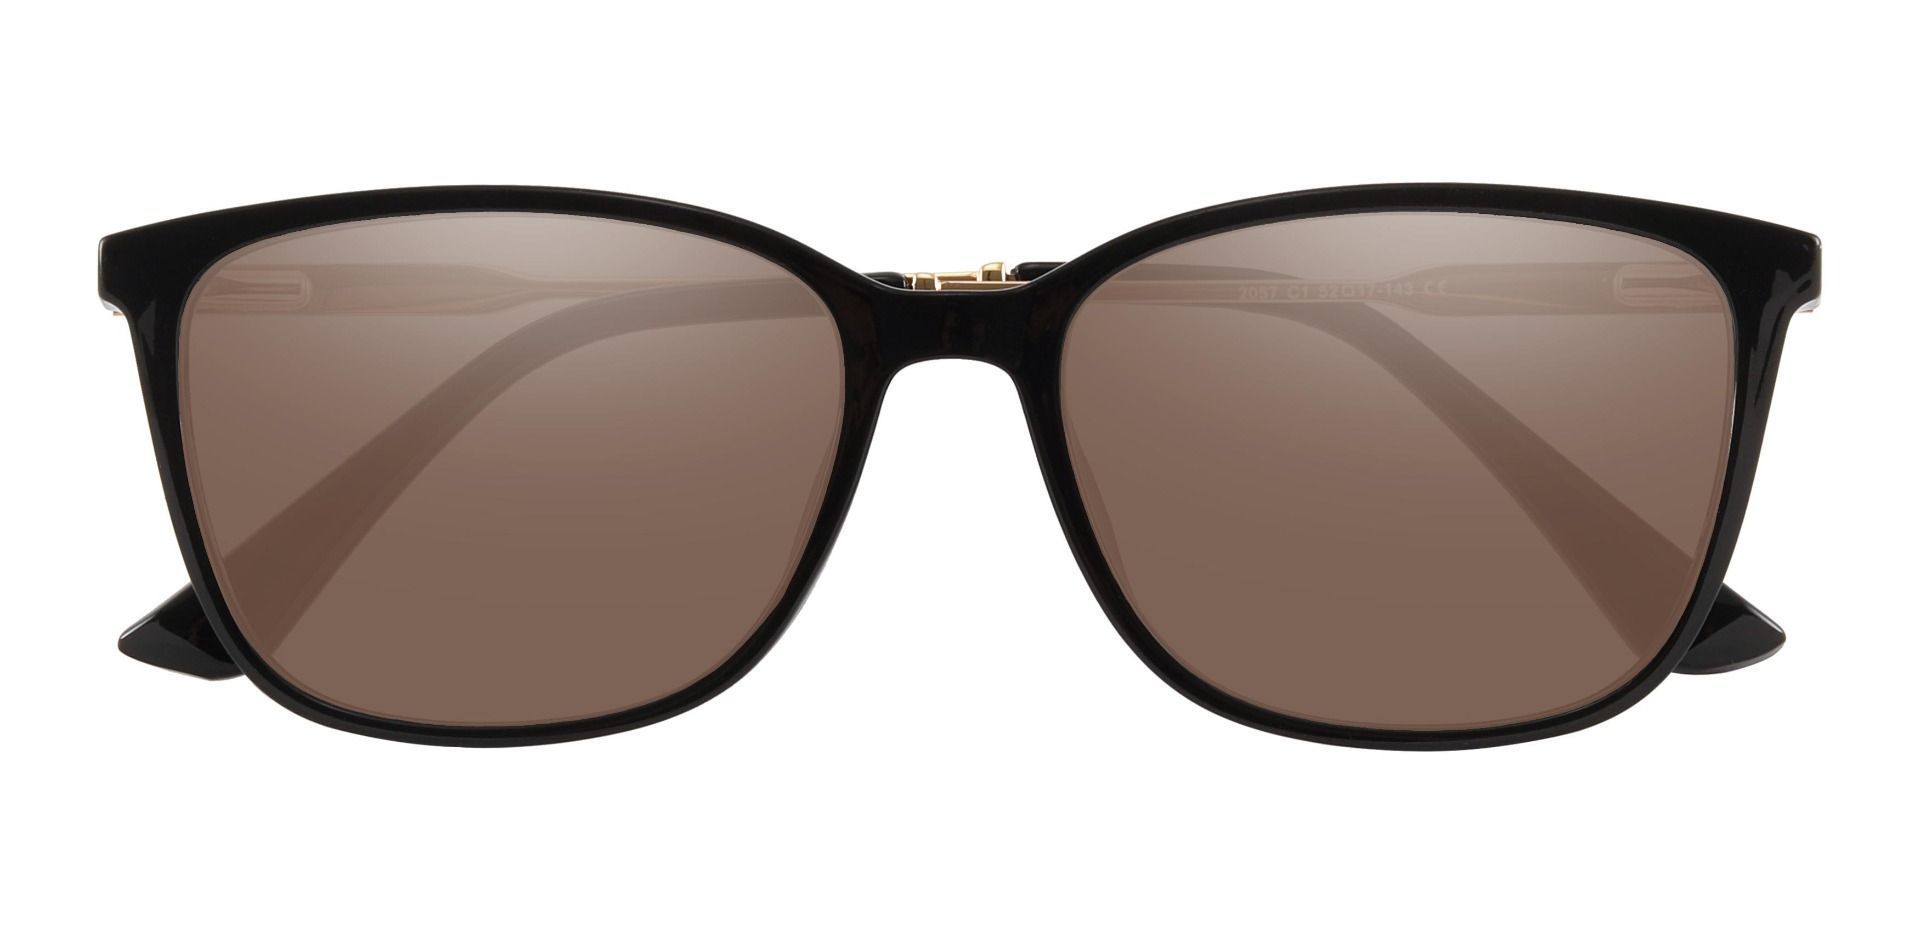 Miami Rectangle Prescription Sunglasses - Black Frame With Brown Lenses